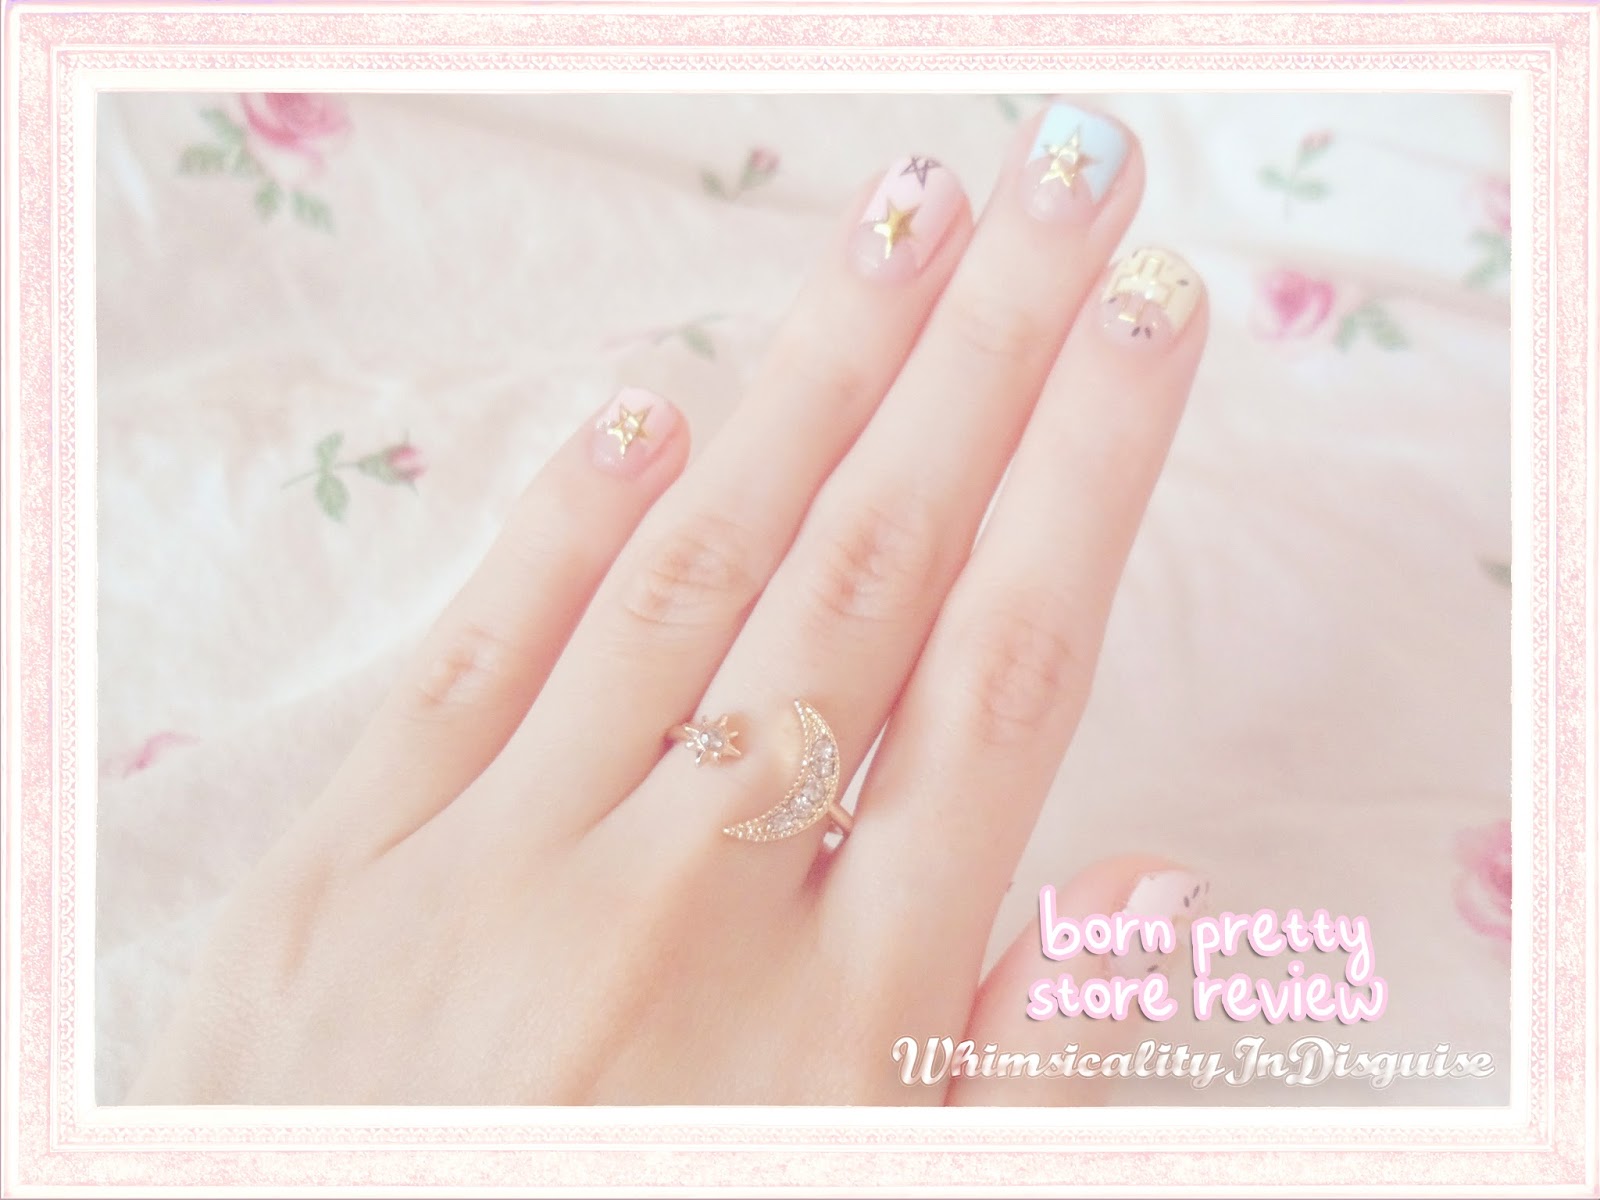 Born Pretty Store ring accessory review discount code